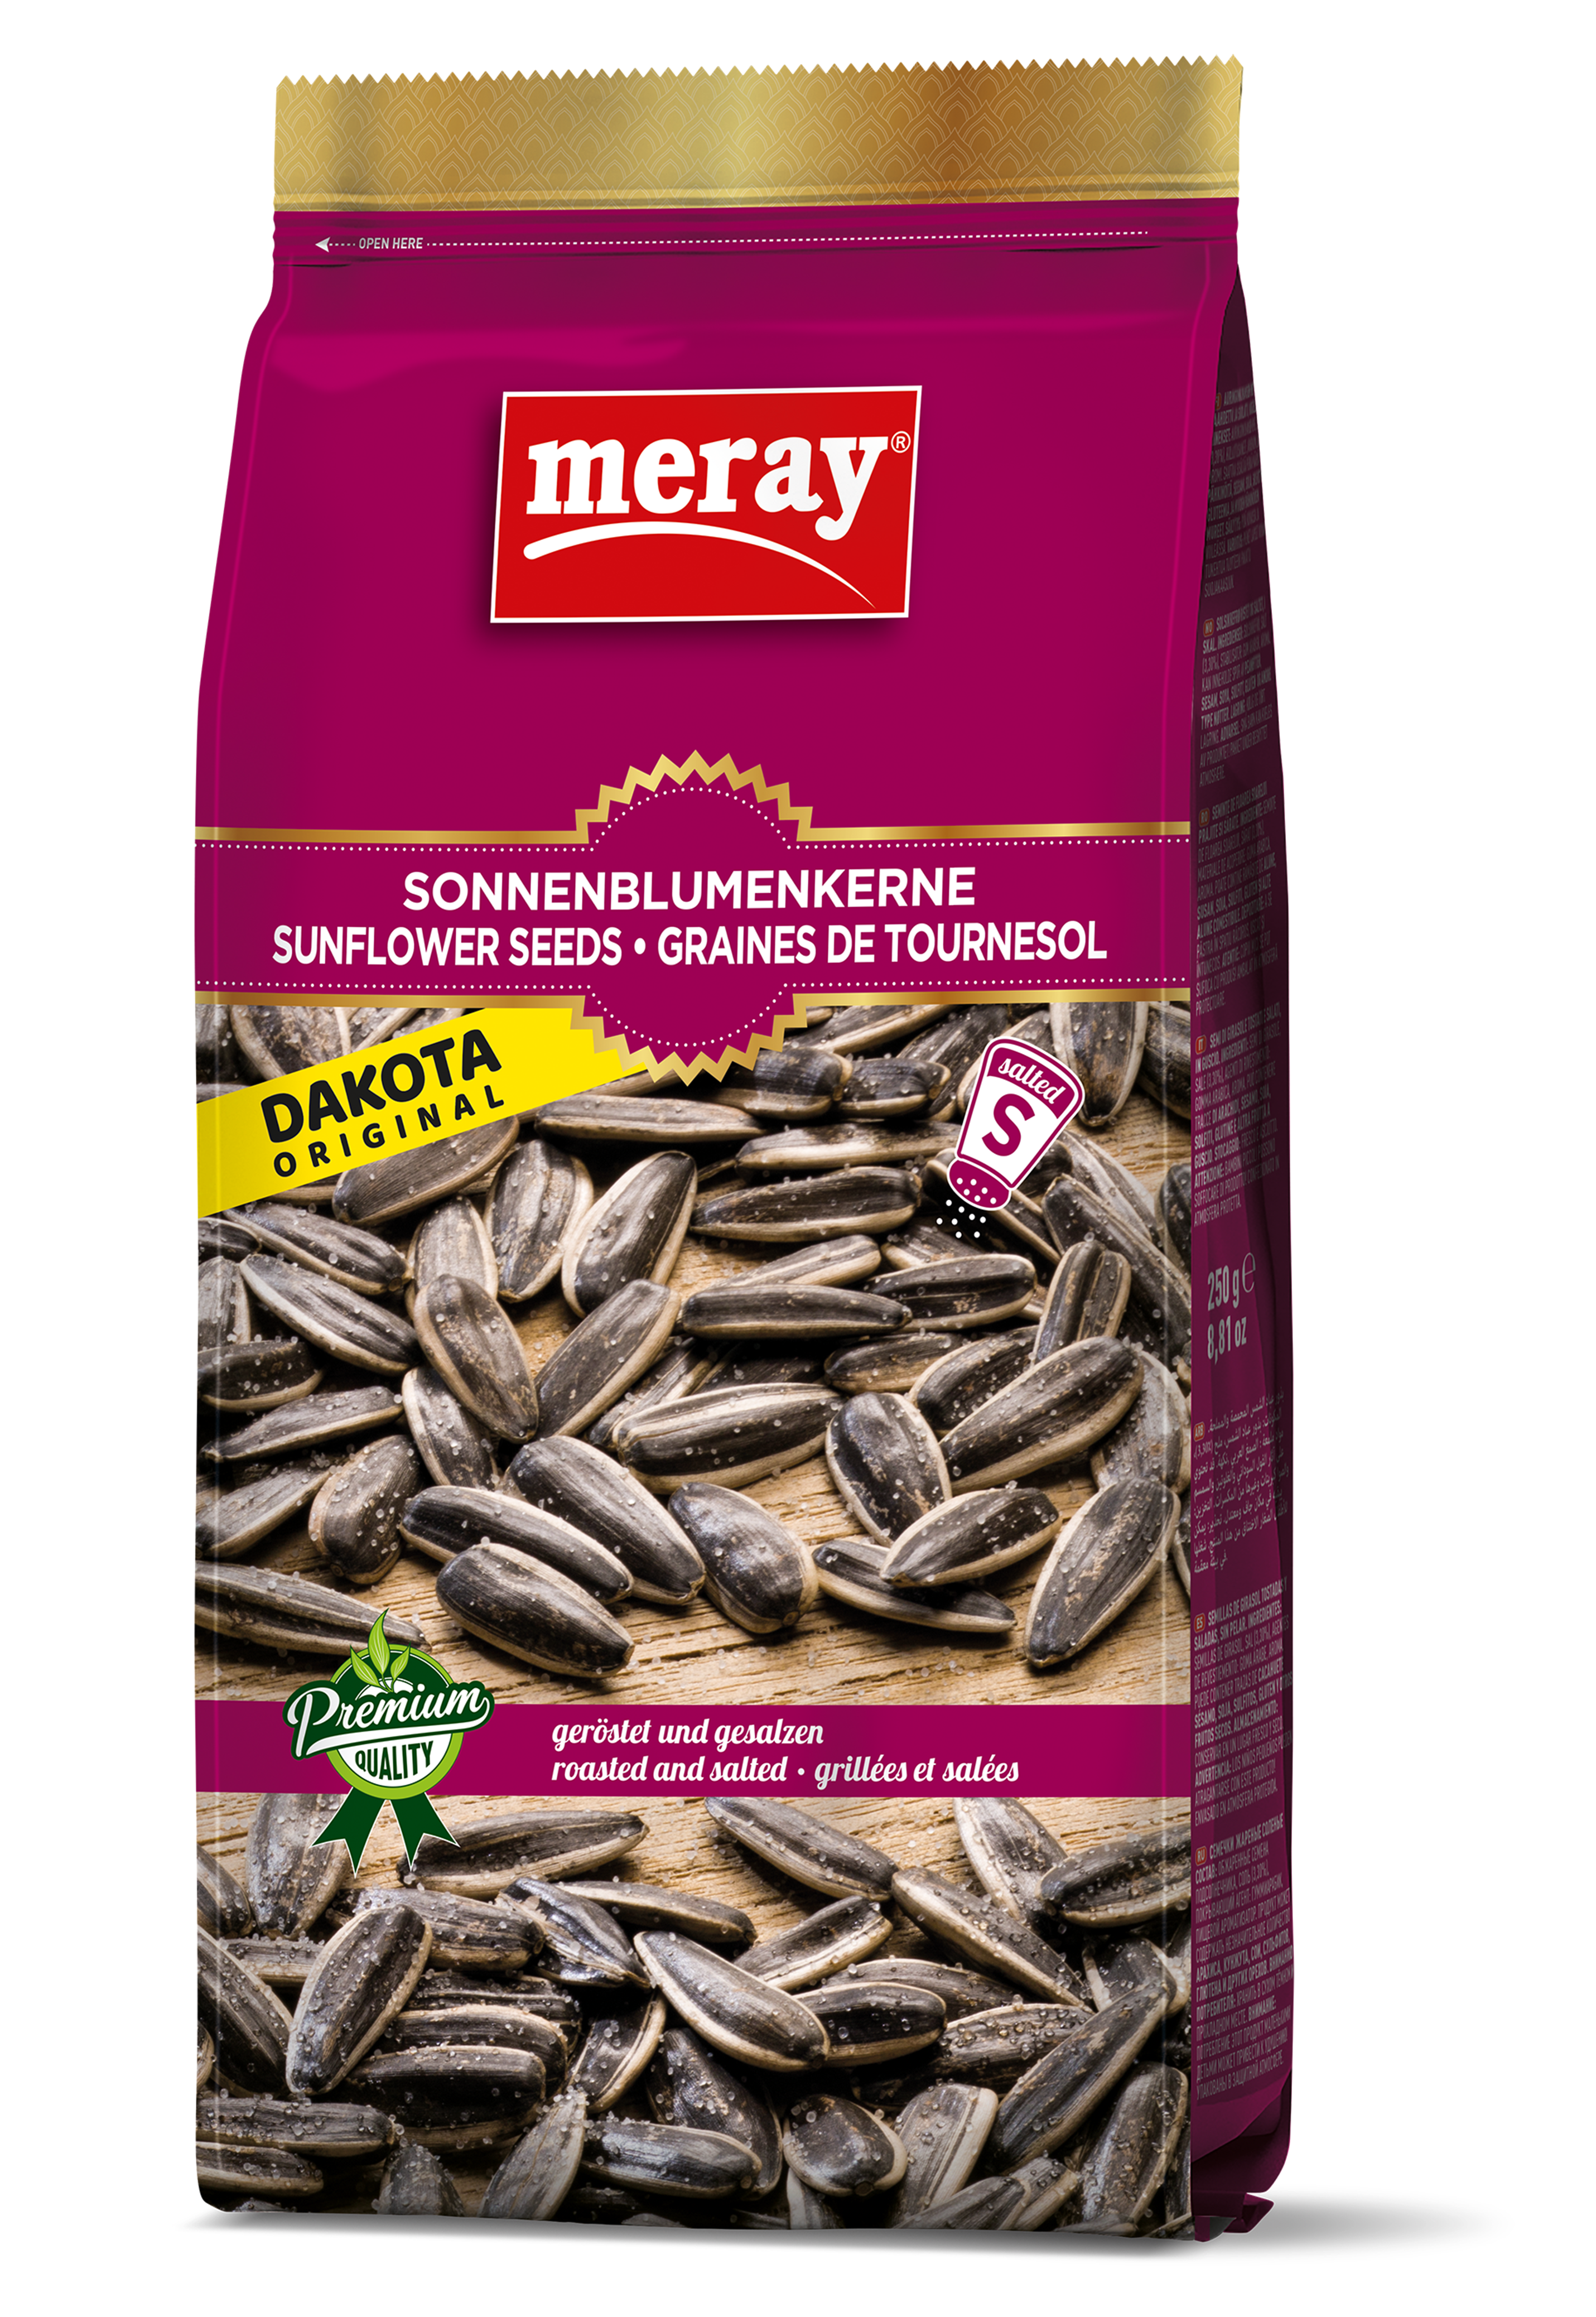 Meray dakota roasted and salted sunflower seeds – graines de tournesol grillées et salées – geröstete und gesalzene Sonnenbluemenkerne – 250g